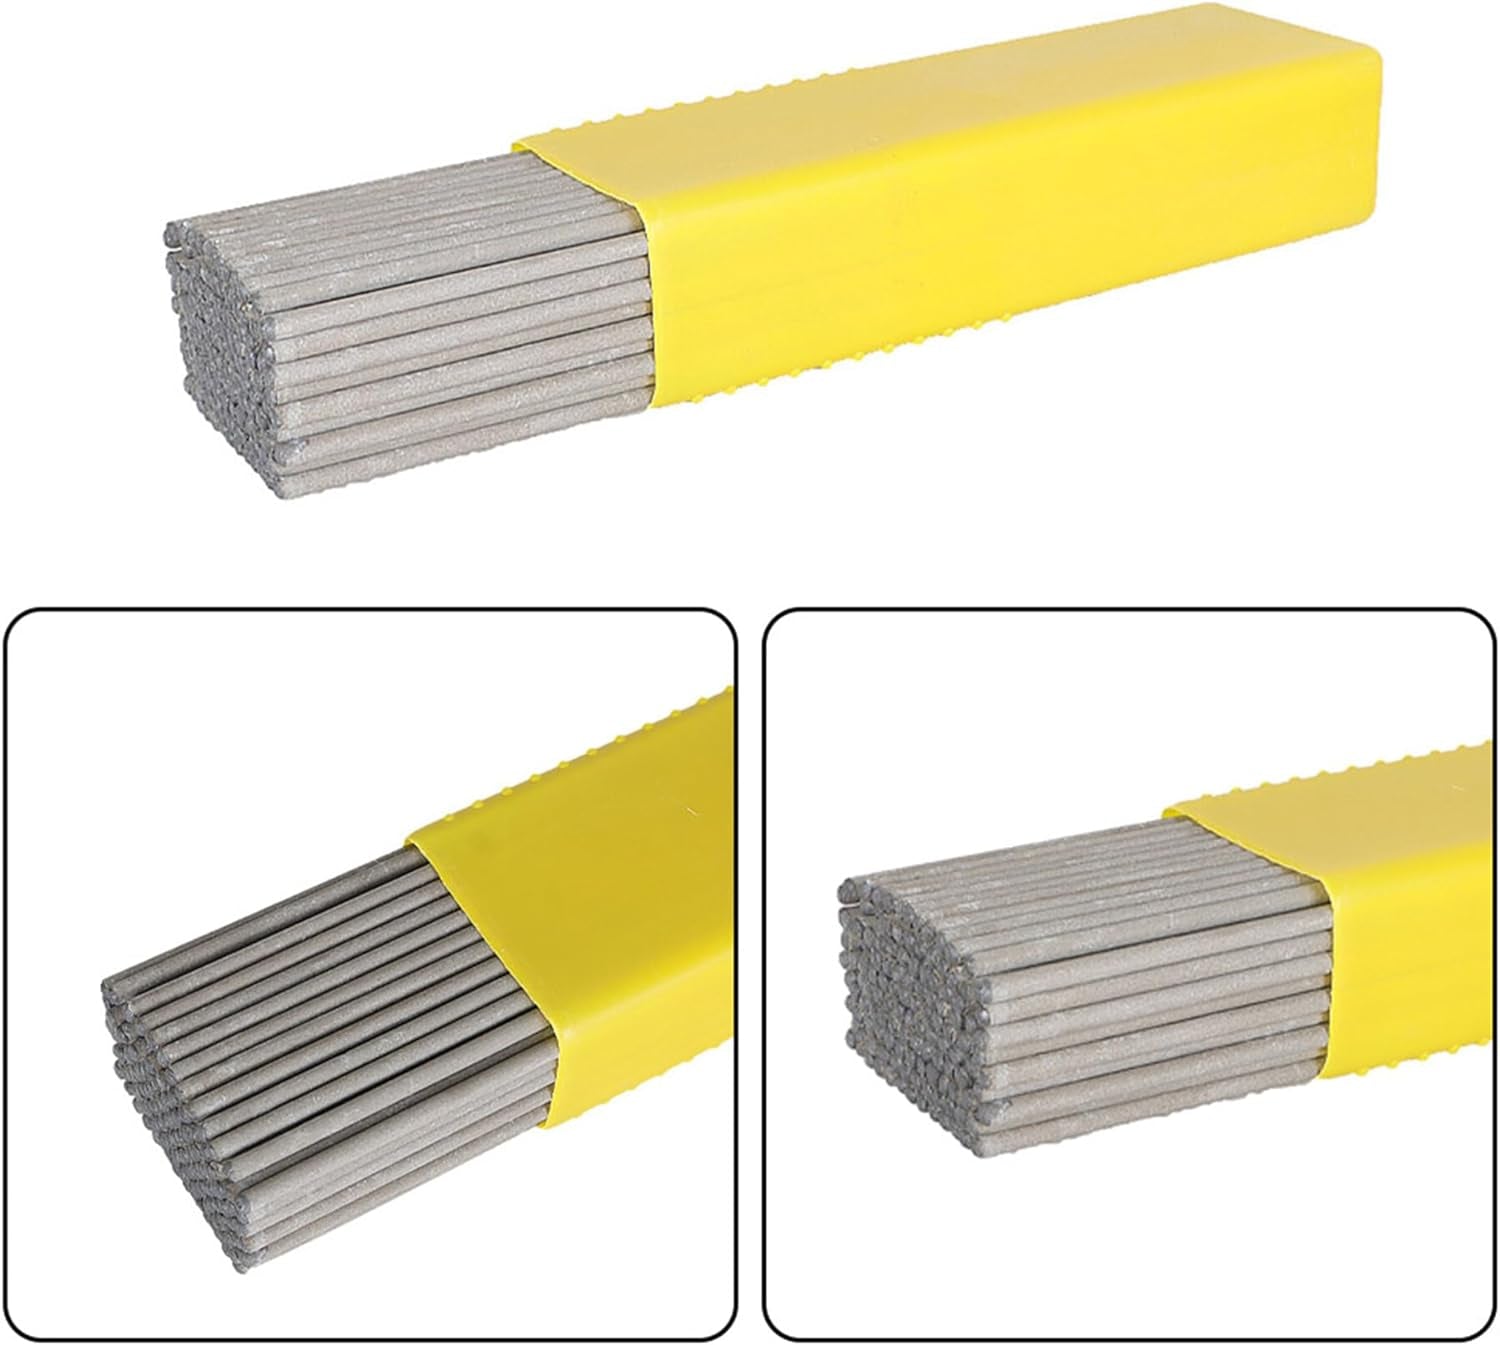 E7018 1/8 Inch Arc Welding Rods Carbon Steel Electrode, 60 Lbs (10 Lbs X 6 Packs) Welding Rod